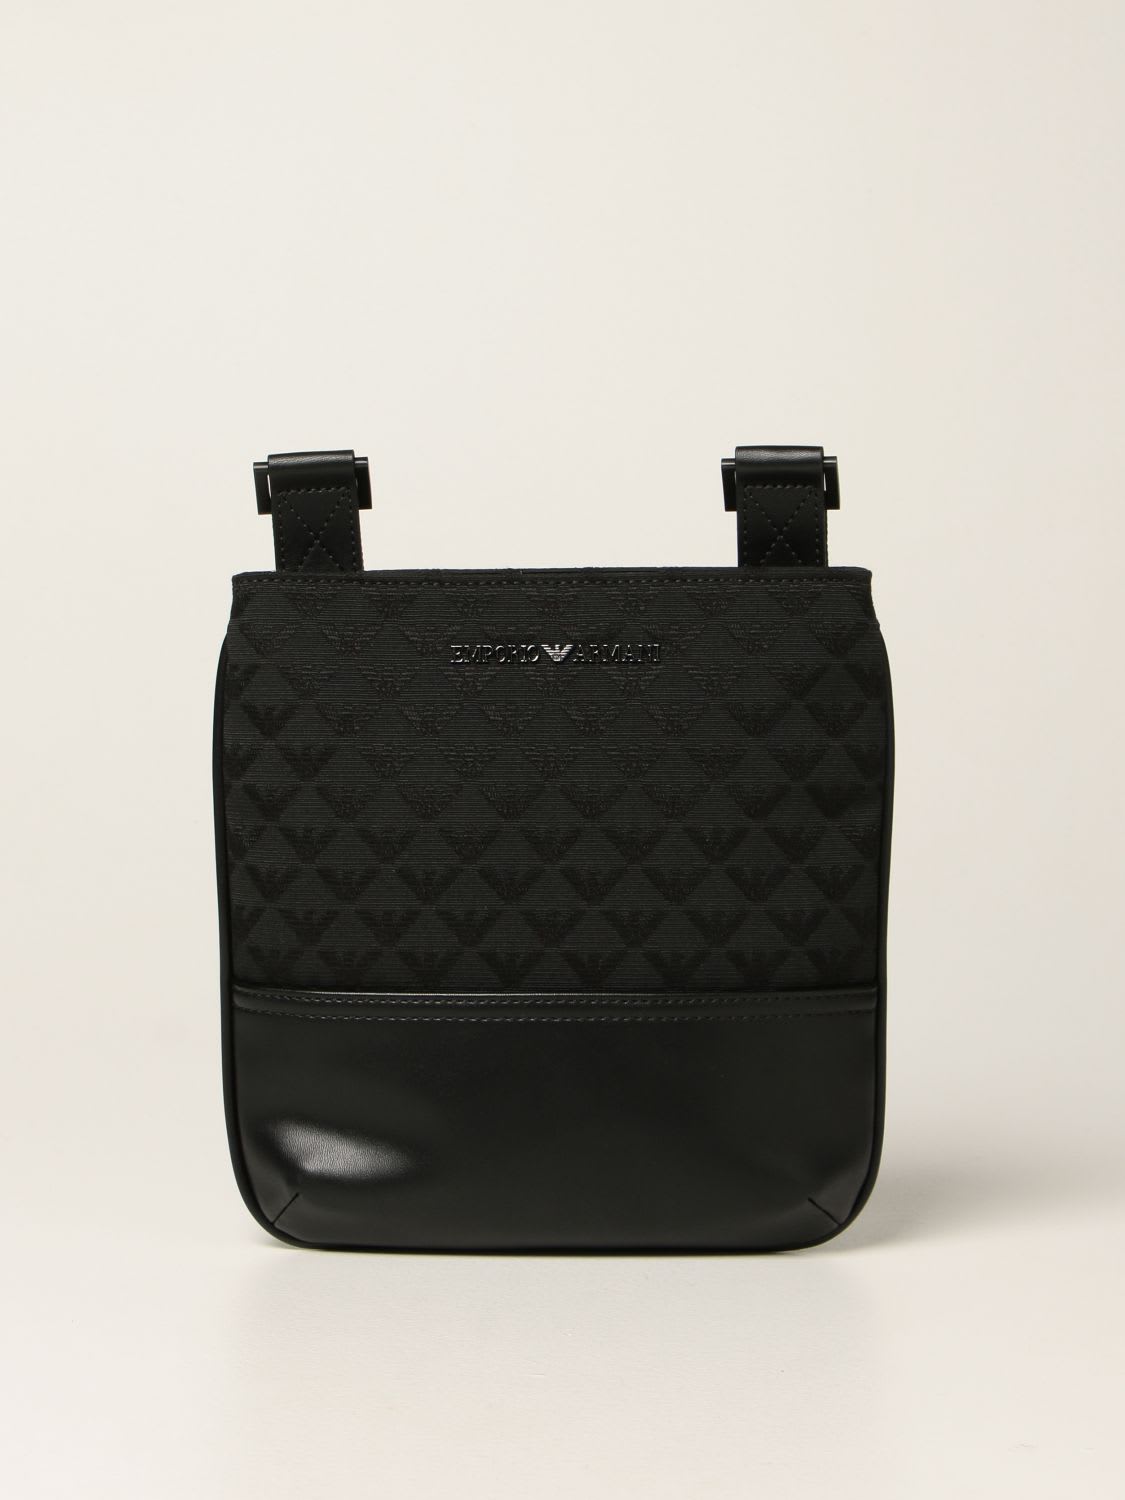 Emporio Armani Shoulder Bag Emporio Armani Bag In Synthetic Leather And Fabric